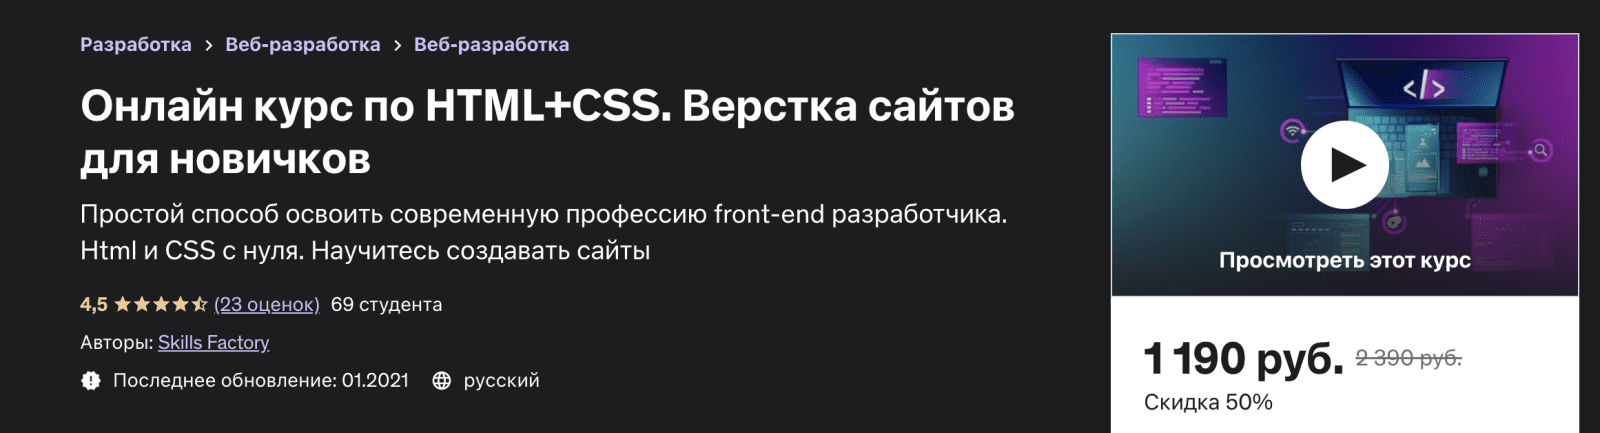 [Skills Factory] Онлайн курс по HTML+CSS. Верстка сайтов для новичков (2021)